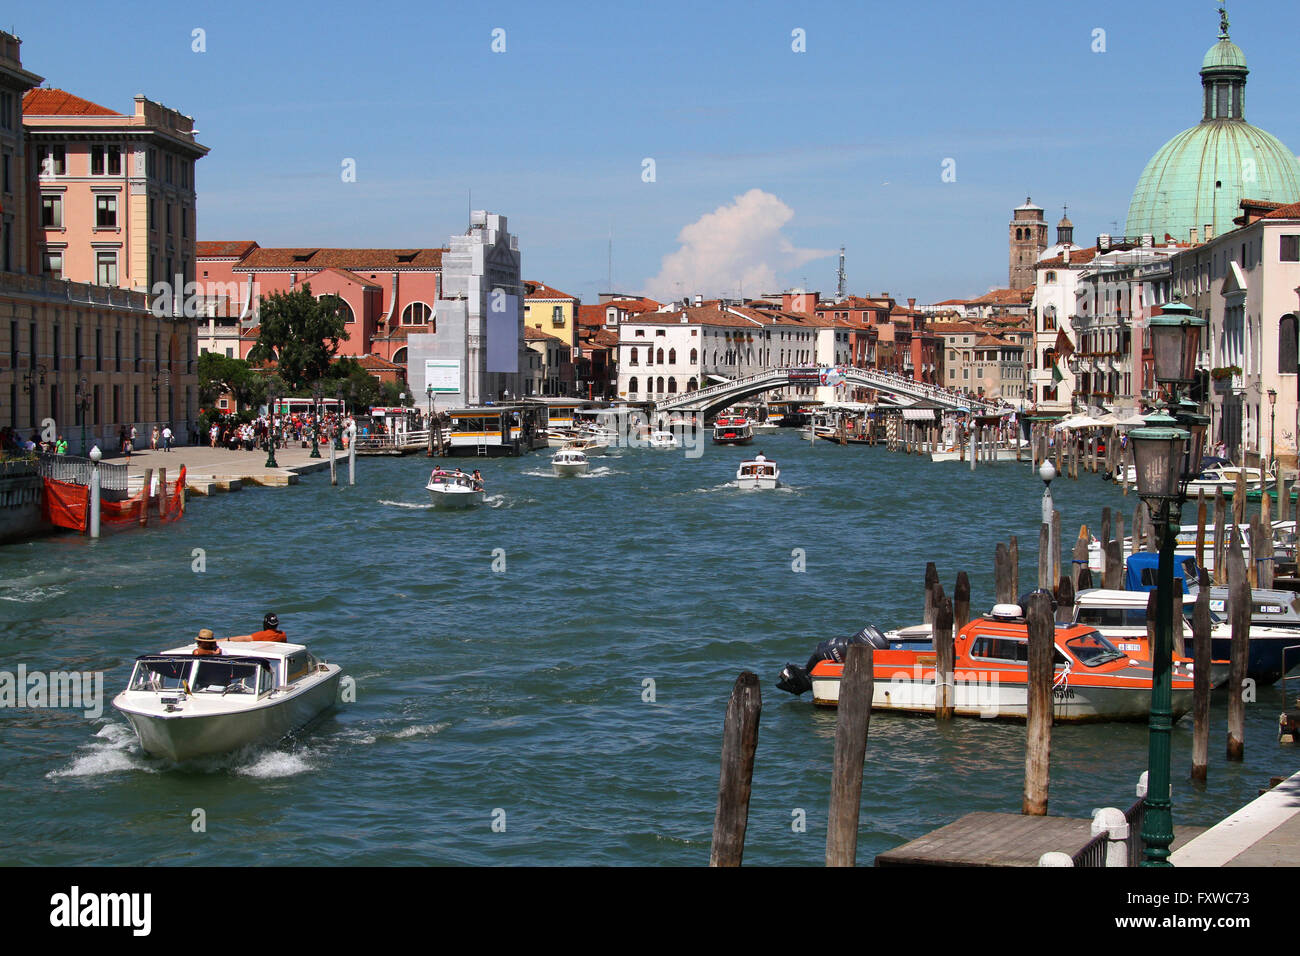 BOATS ON GRAND CANAL NEAR PIAZZALE ROMA VENICE VENEZIA ITALY 01 August 2014 Stock Photo